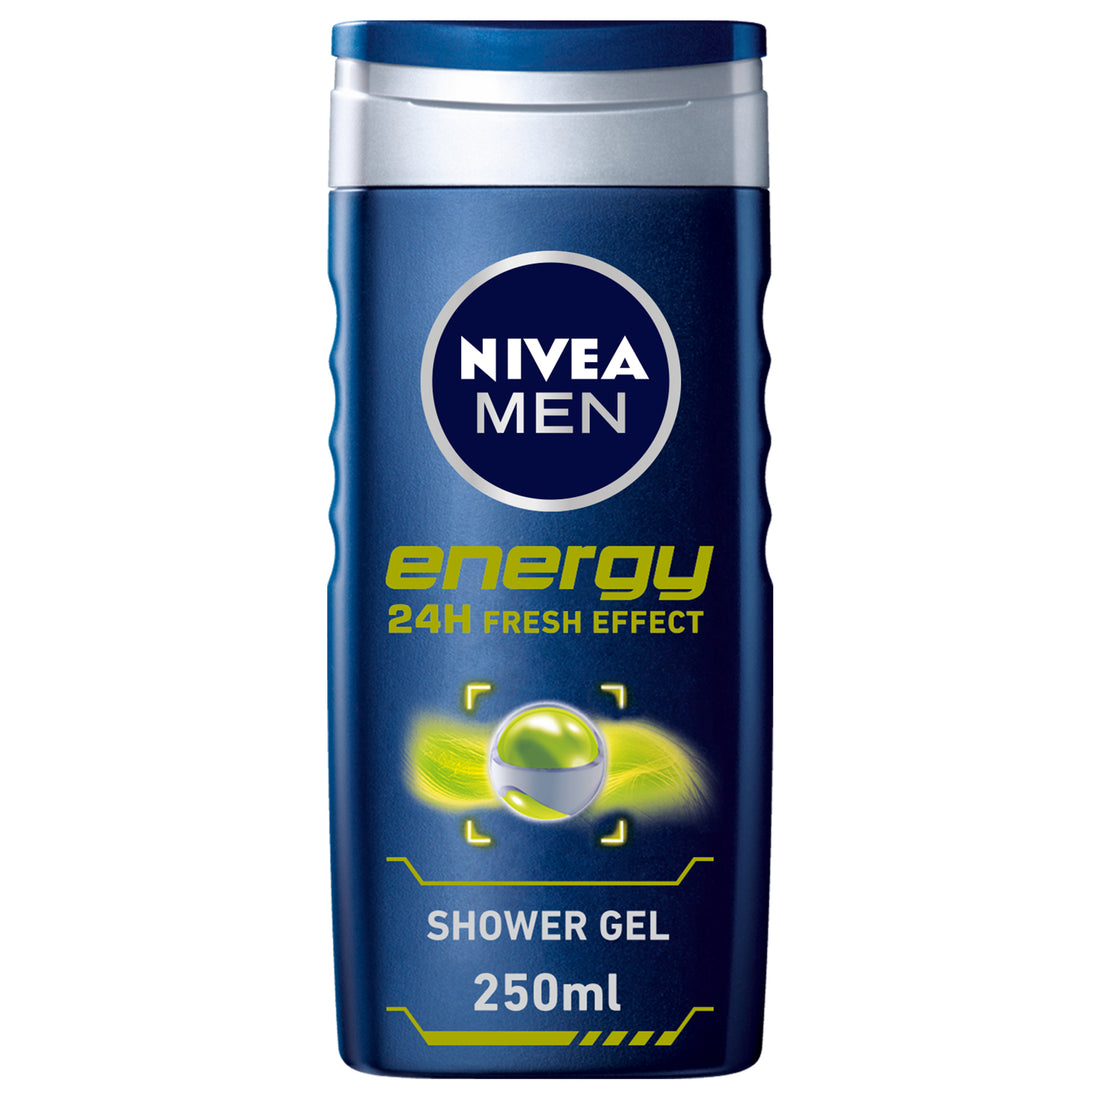 Nivea Men Energy 24h Fresh Shower Gel 3in1, Masculine Scent, 250ml